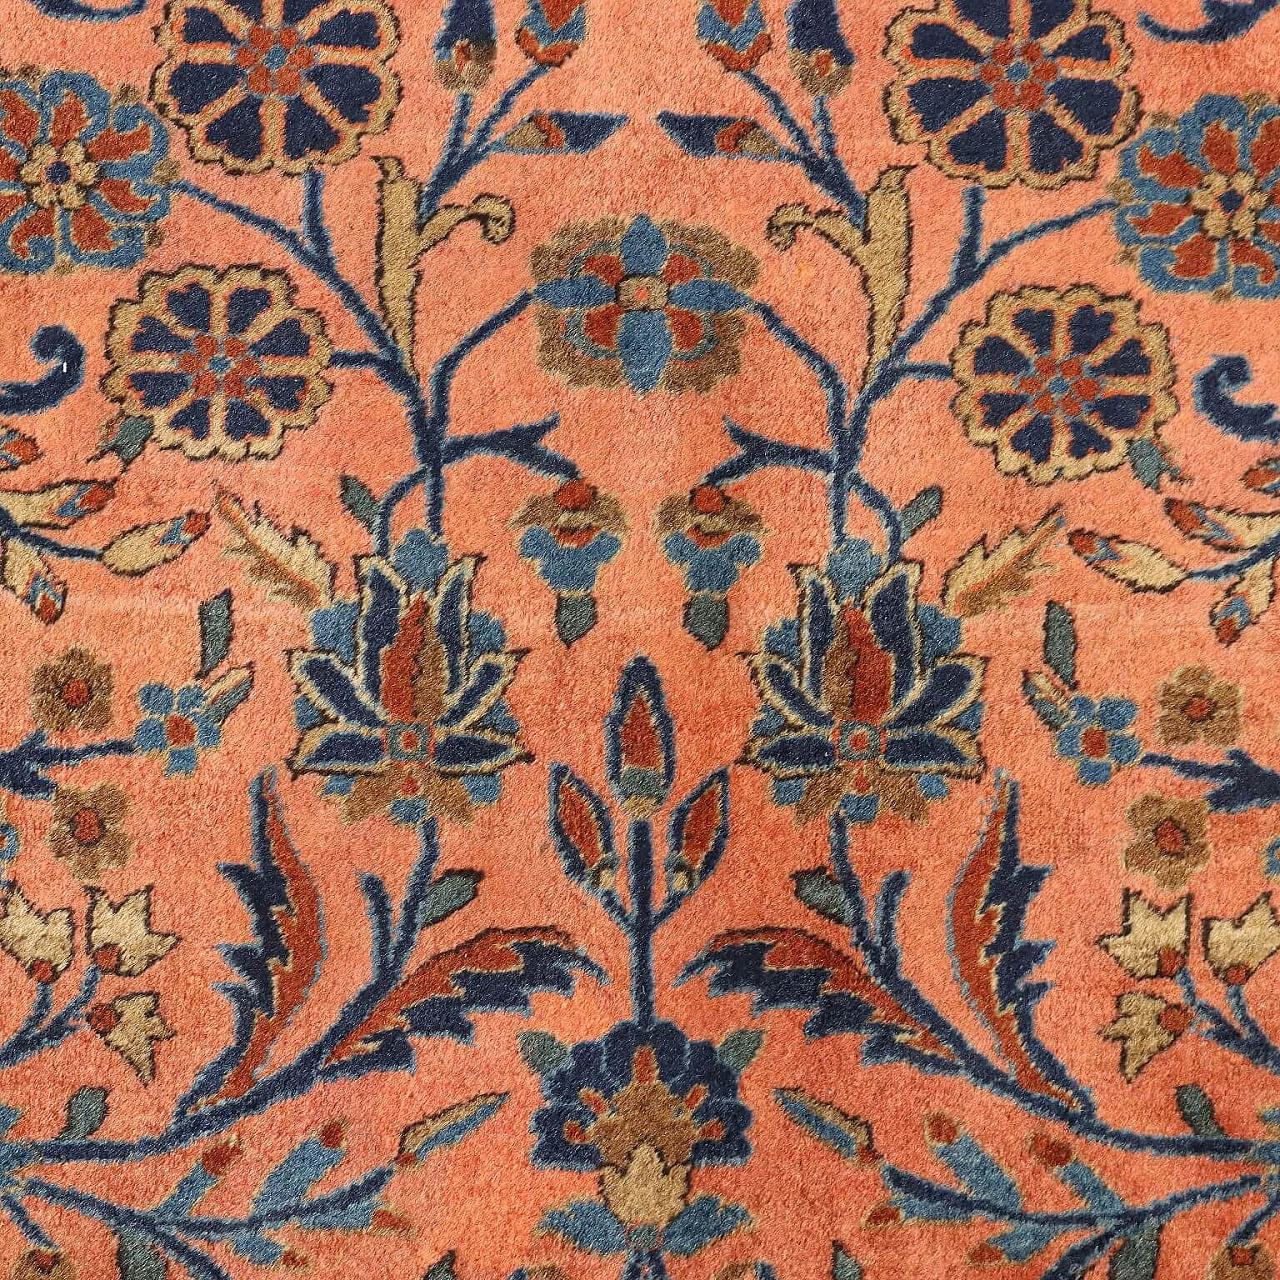 Iranian Keshan Manchester cotton and wool carpet 4